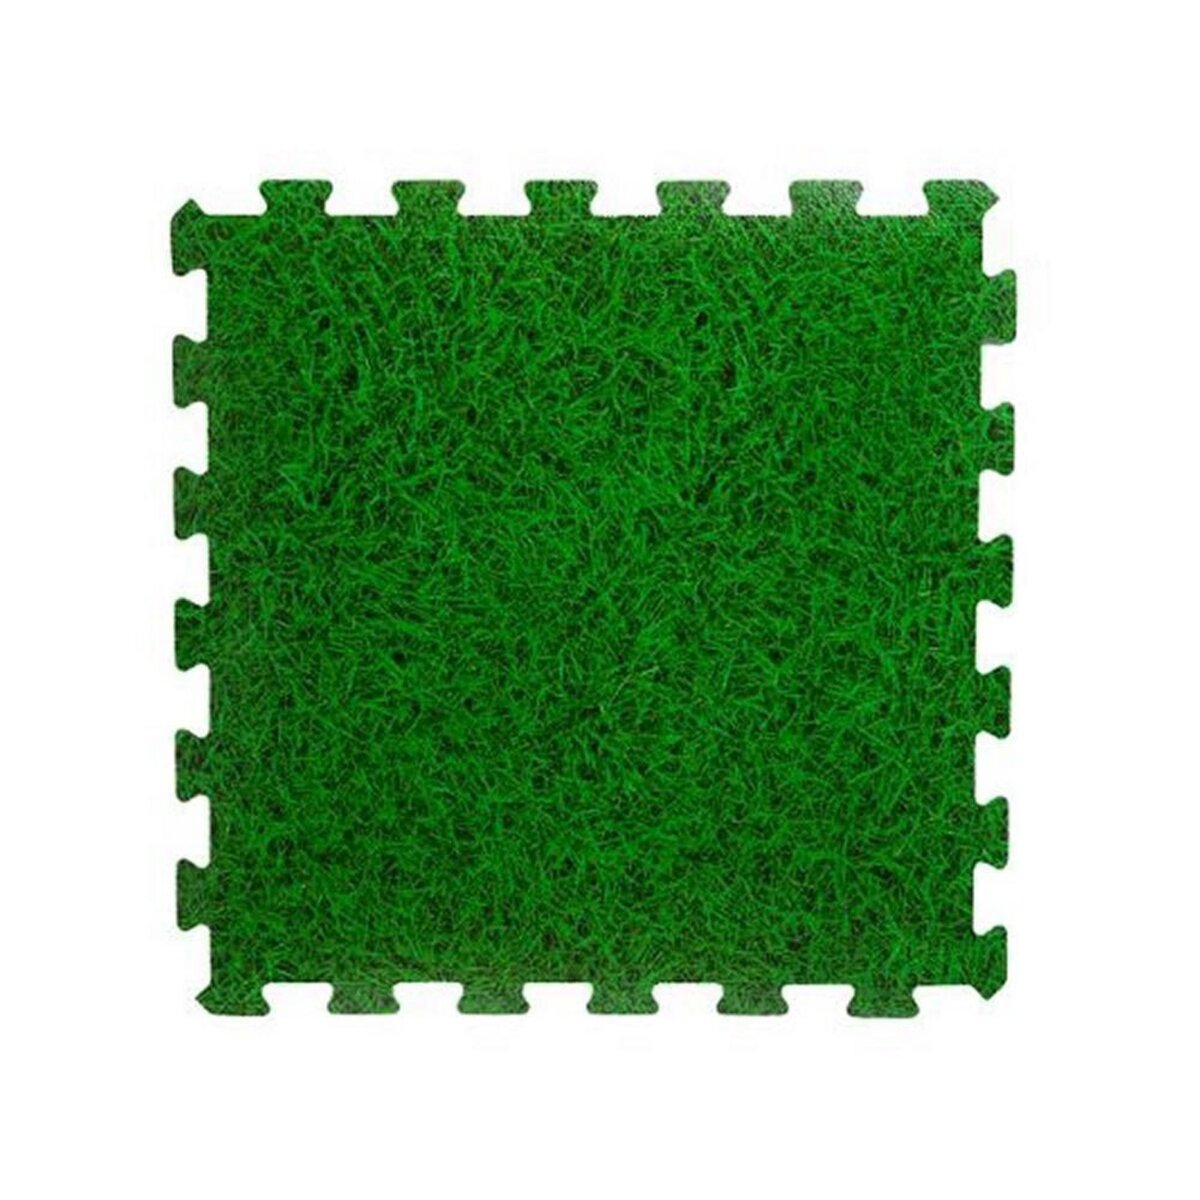 ATMOSPHERA Tapis de sol modulable 8 dalles herbe